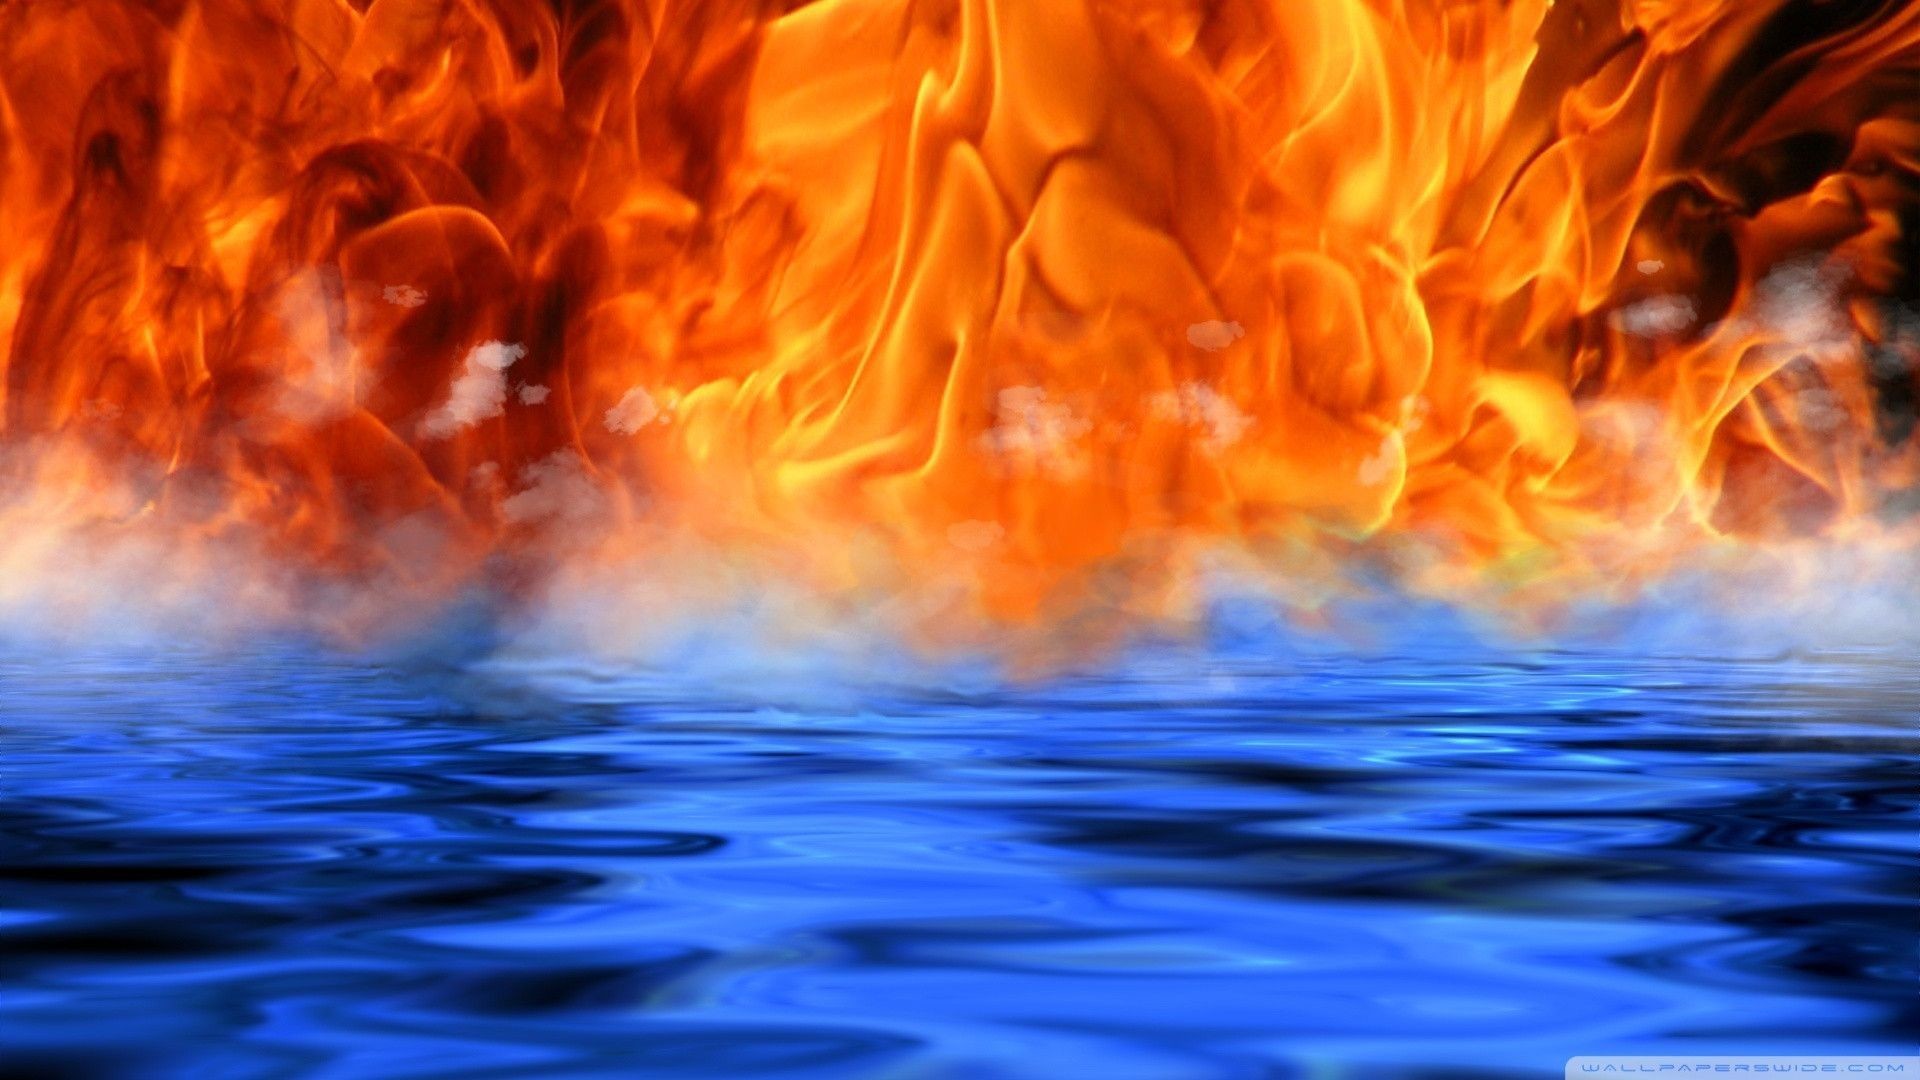 fondos de pantalla de fuego fresco,fuego,calor,fuego,agua,atmósfera